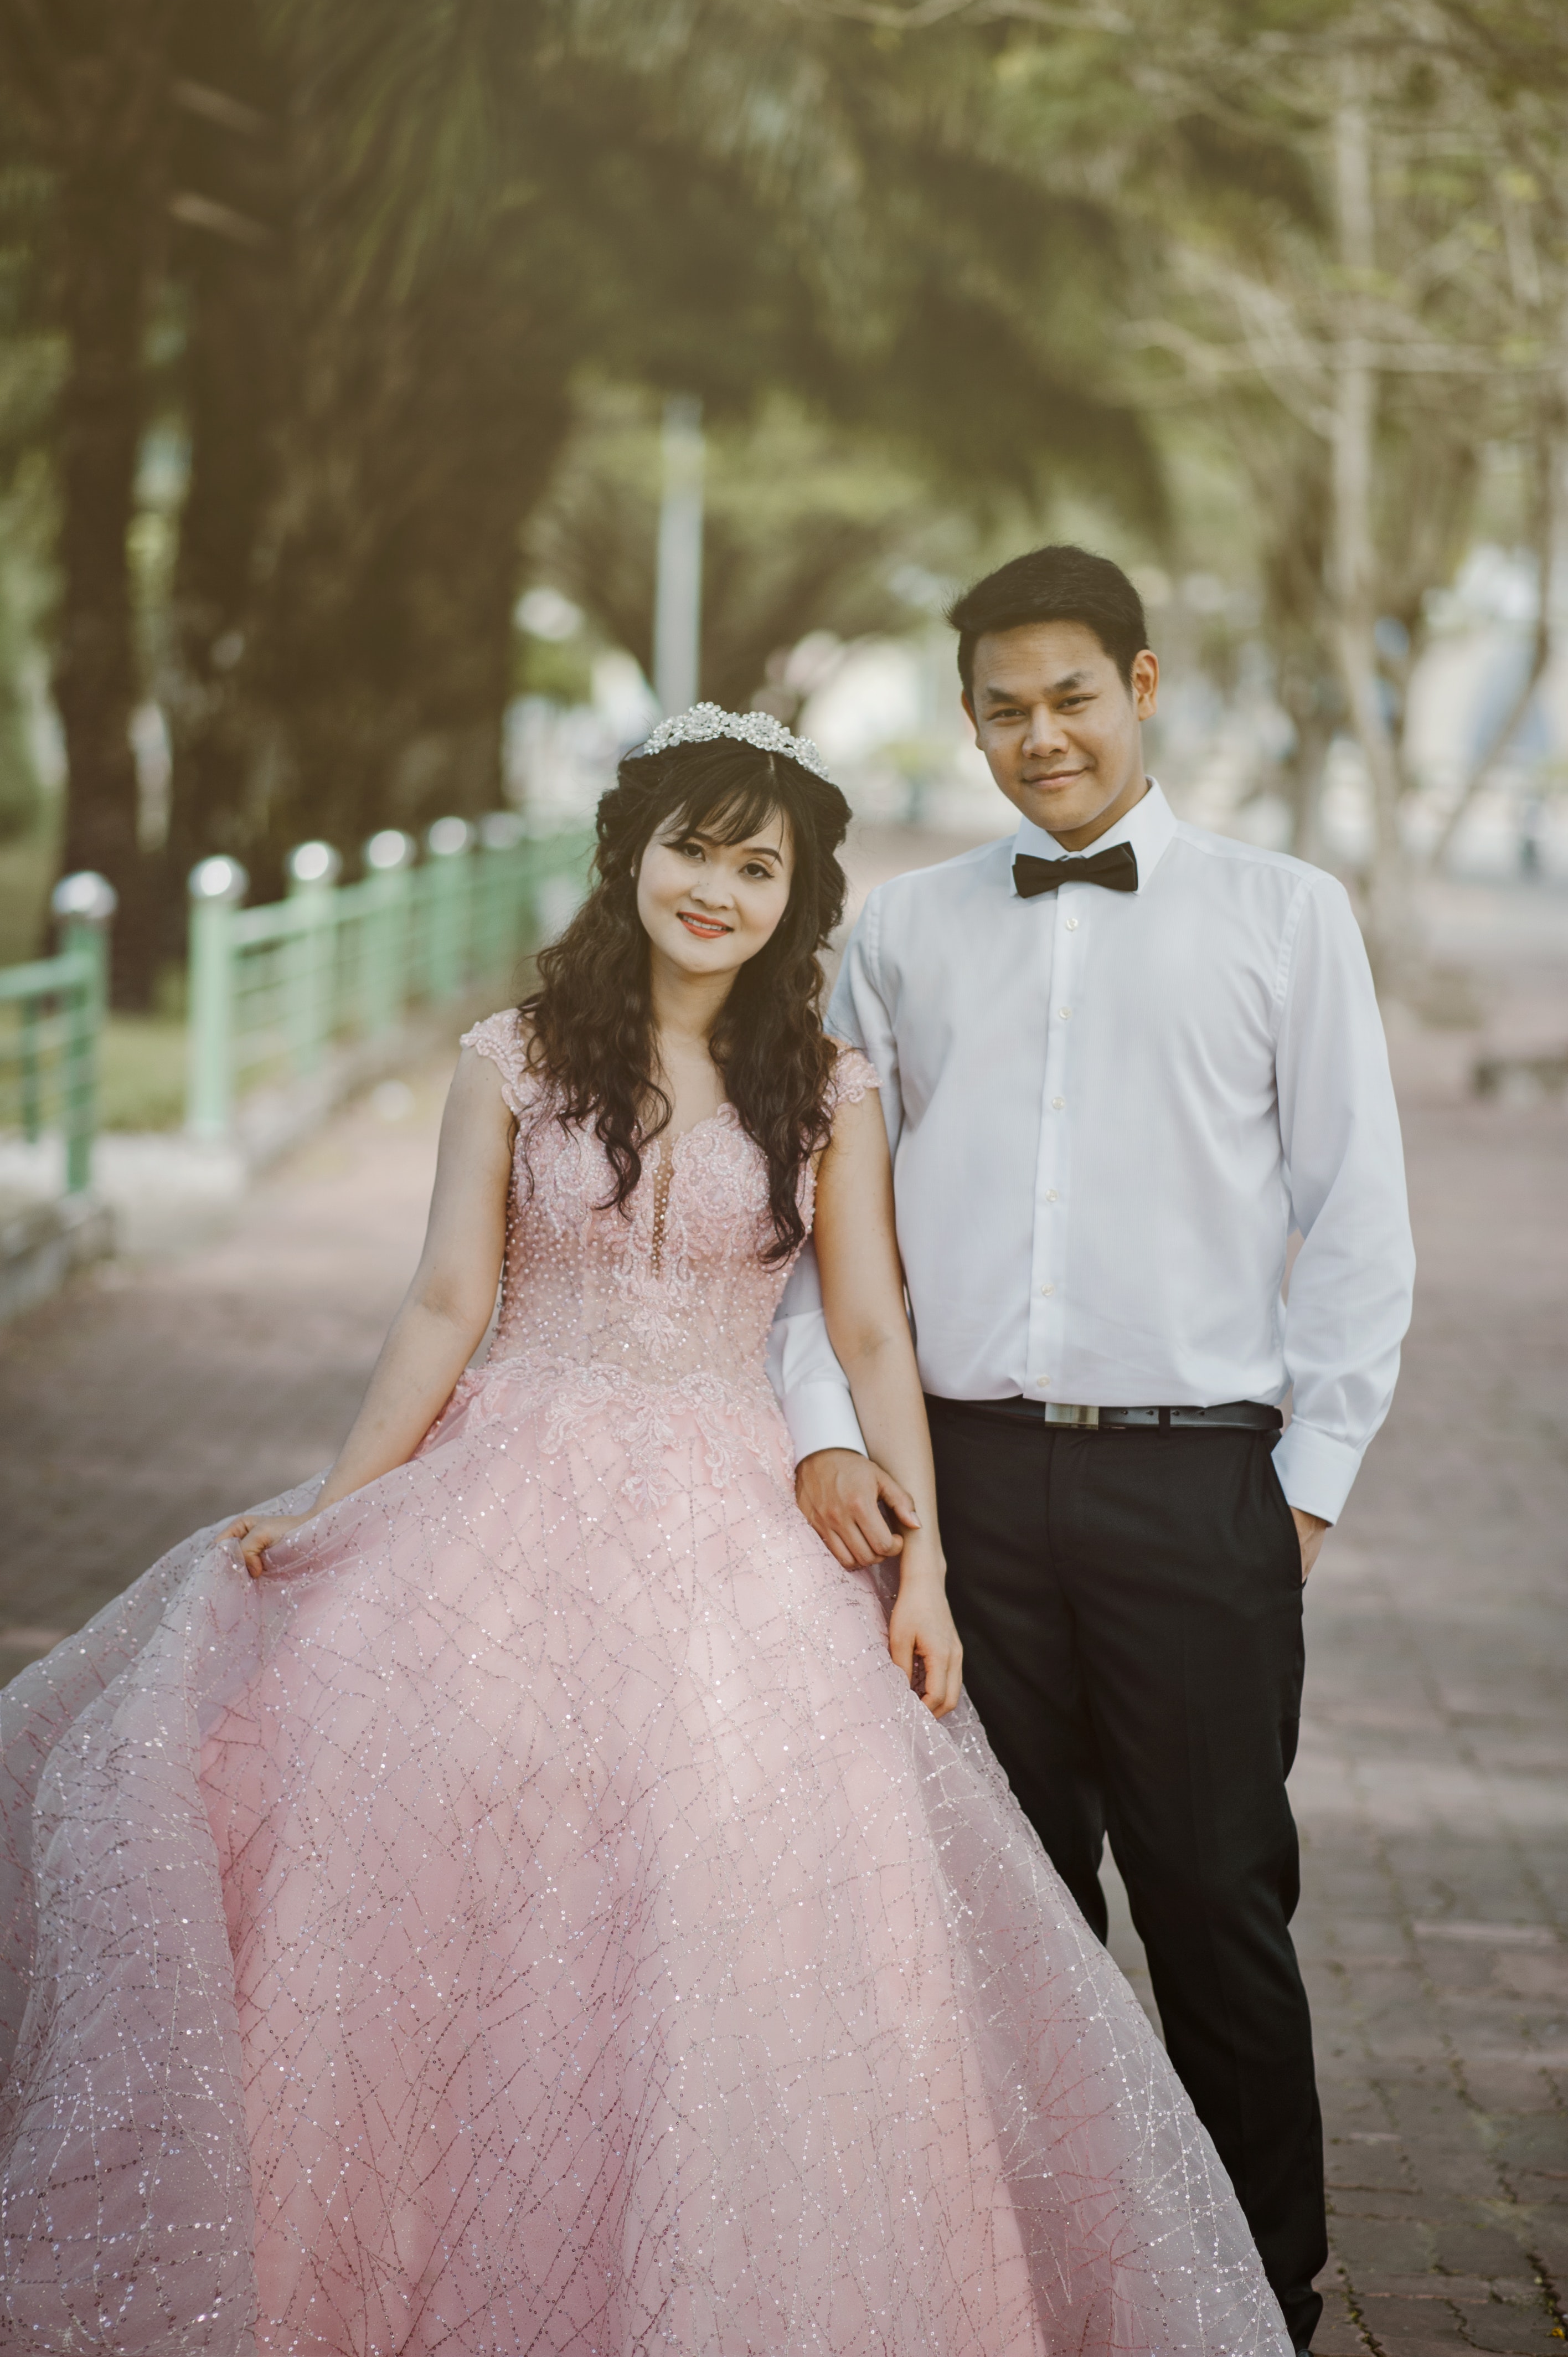 Woman wearing pink wedding gown standing next to man wearing white dress shirt photo